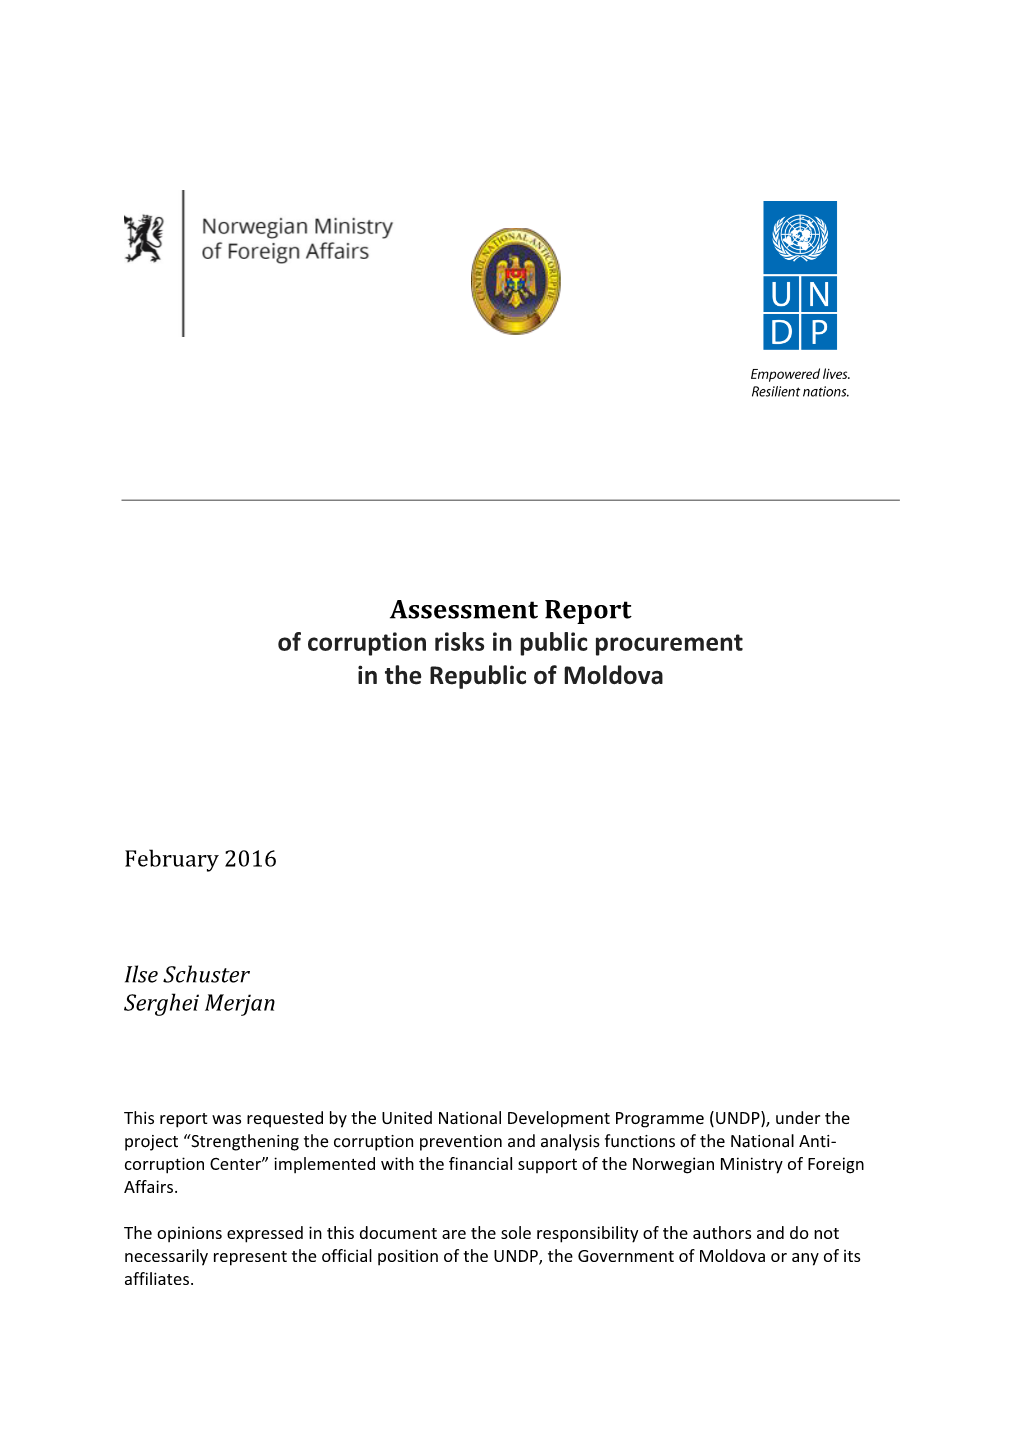 Assessment Report of Corruption Risks in Public Procurement in the Republic of Moldova